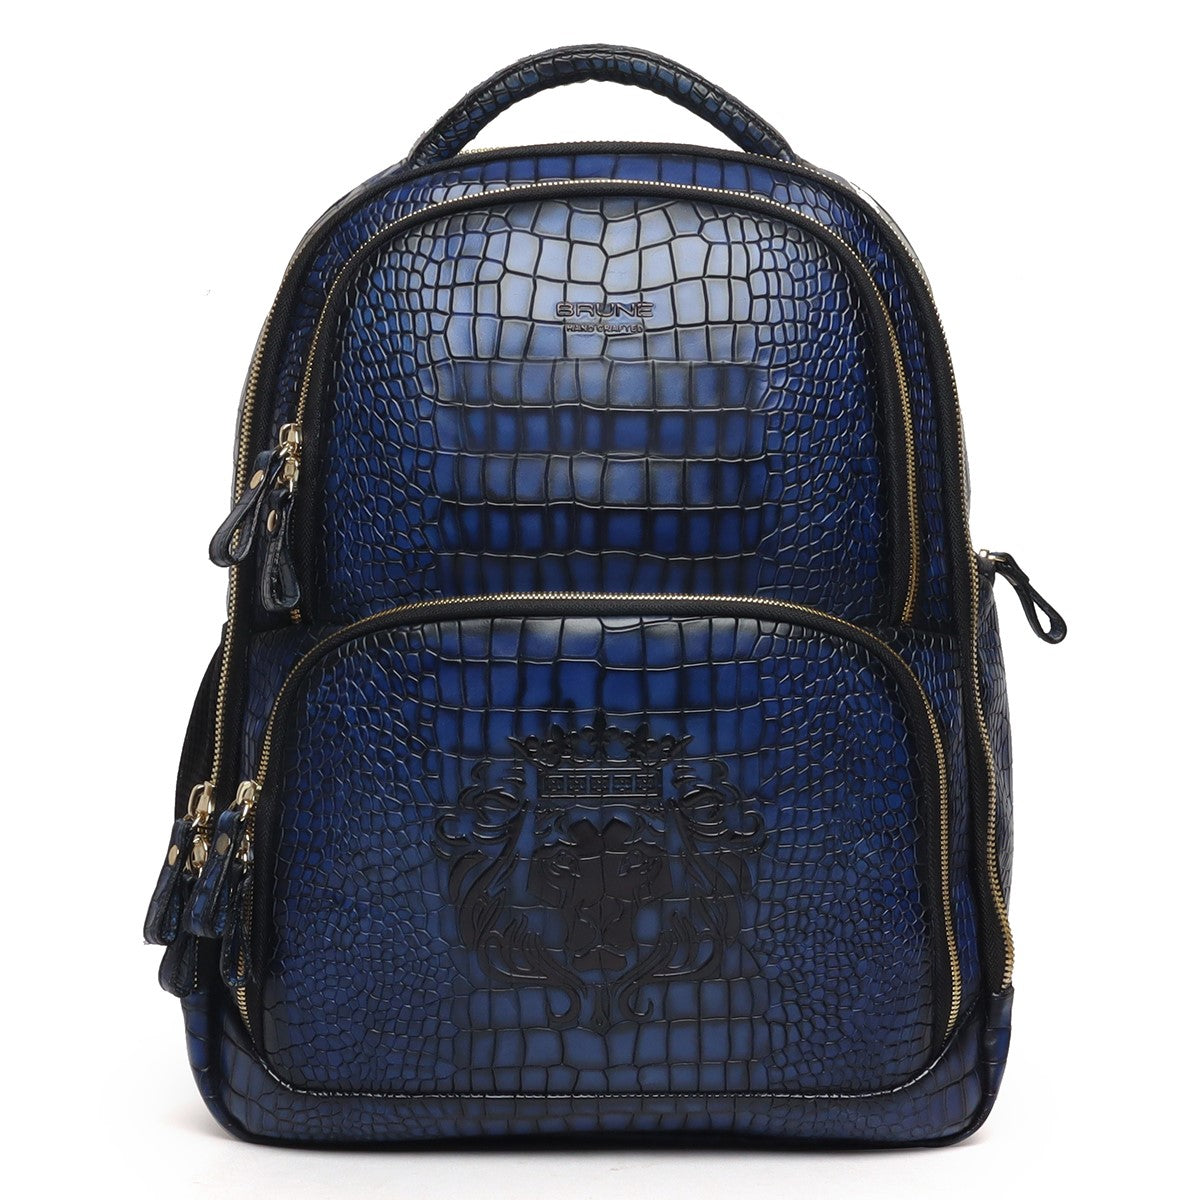 Blue Deep Cut Croco Hand Painted Leather Backpack by Brune & Bareskin